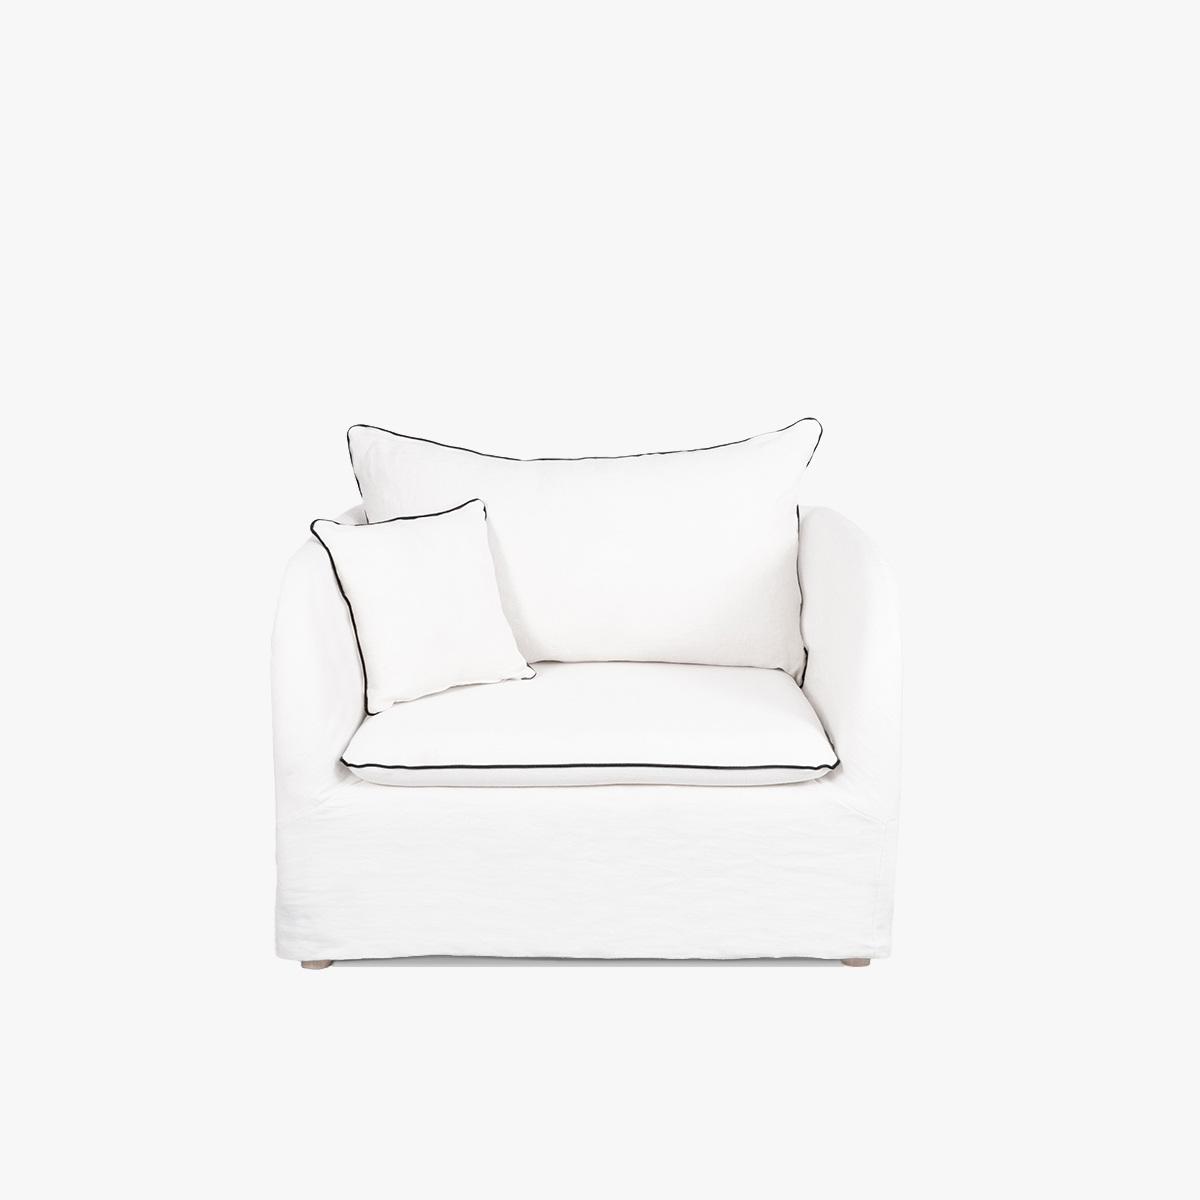 Lounge Amchair Riviera, White / Black - H80 x W110 x D92 cm - Wood / MSL tissue - image 1